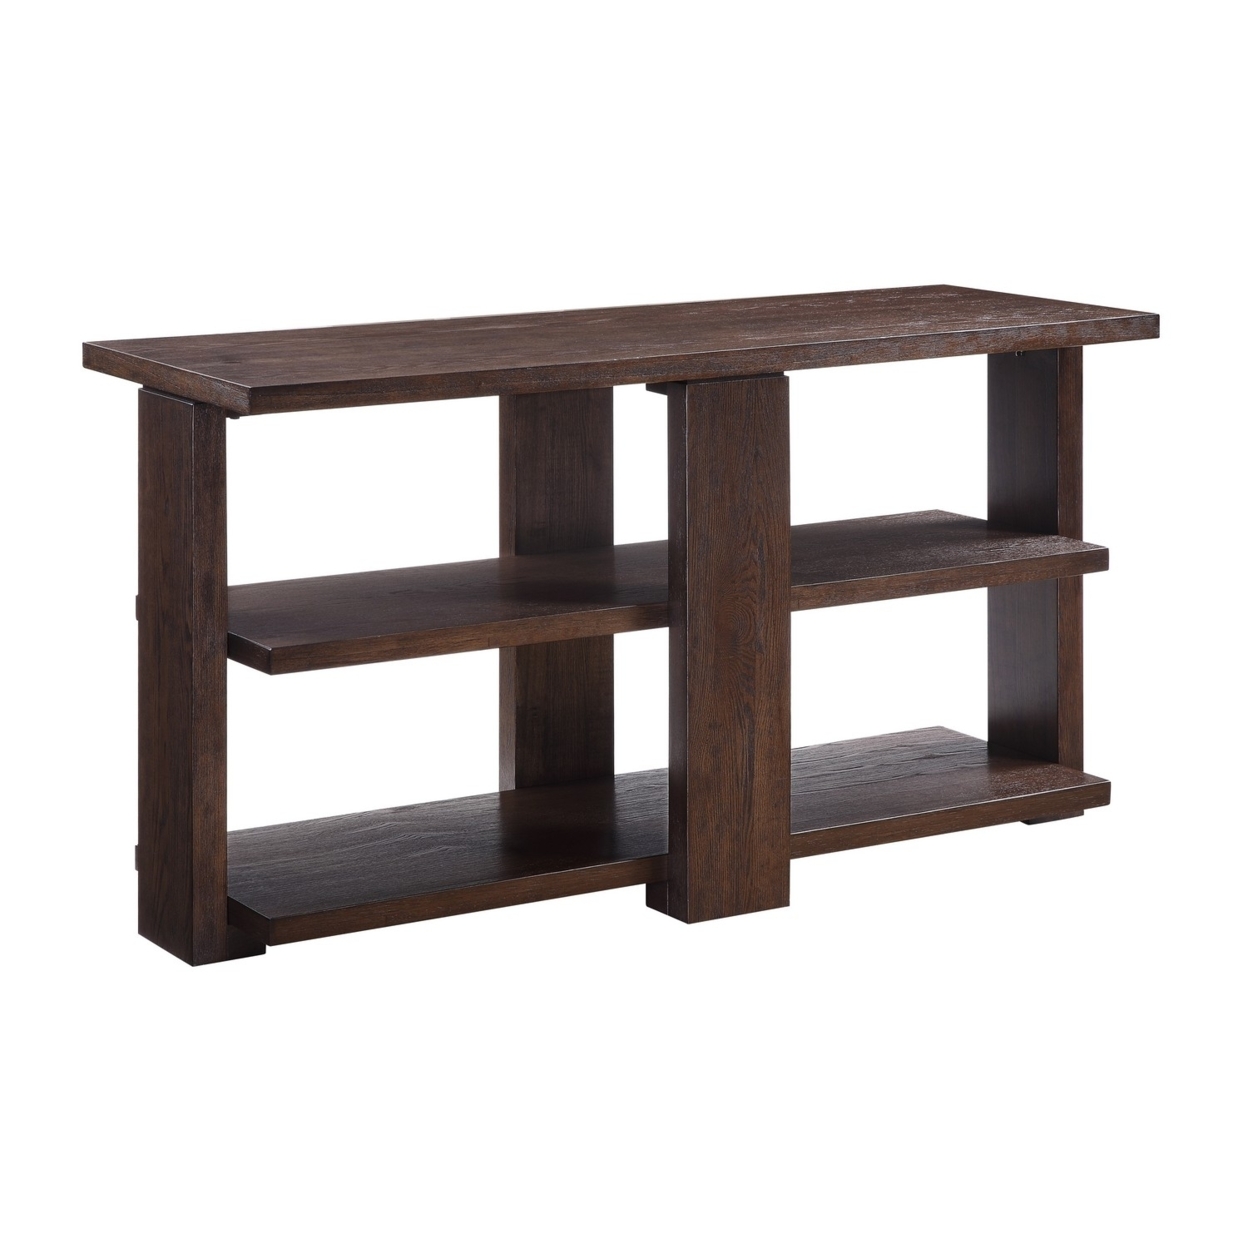 Wooden Sofa Table With 2 Open Display Shelves, Brown- Saltoro Sherpi